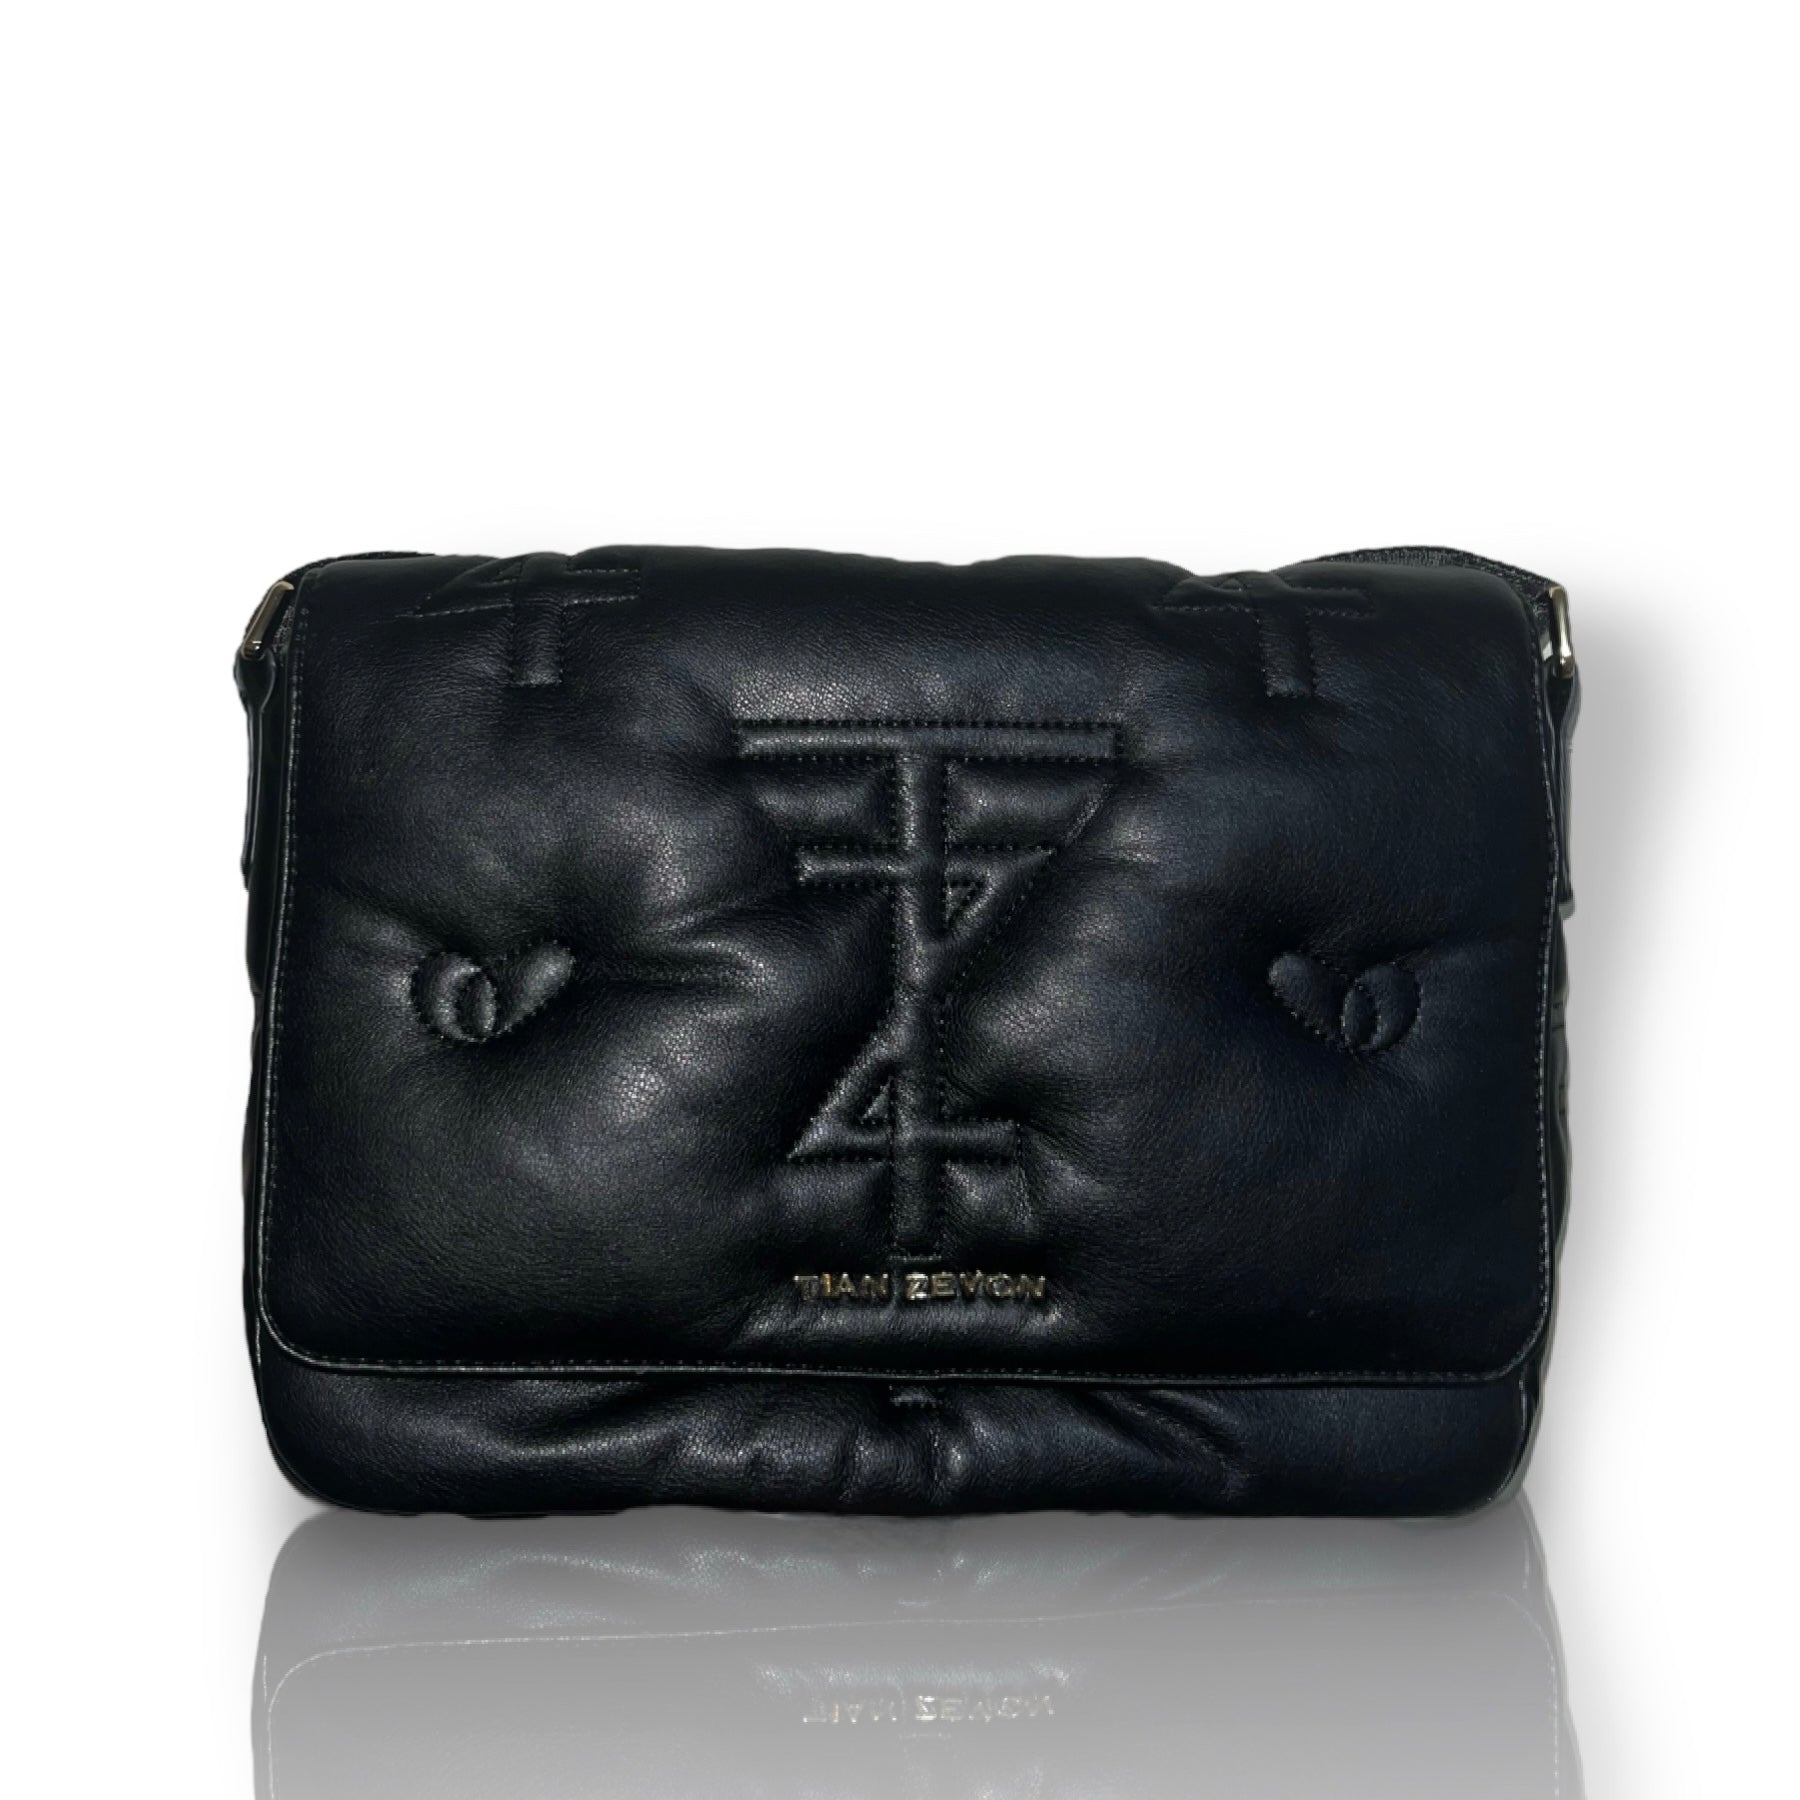 TAAJ leather debossed Messenger - onyx black